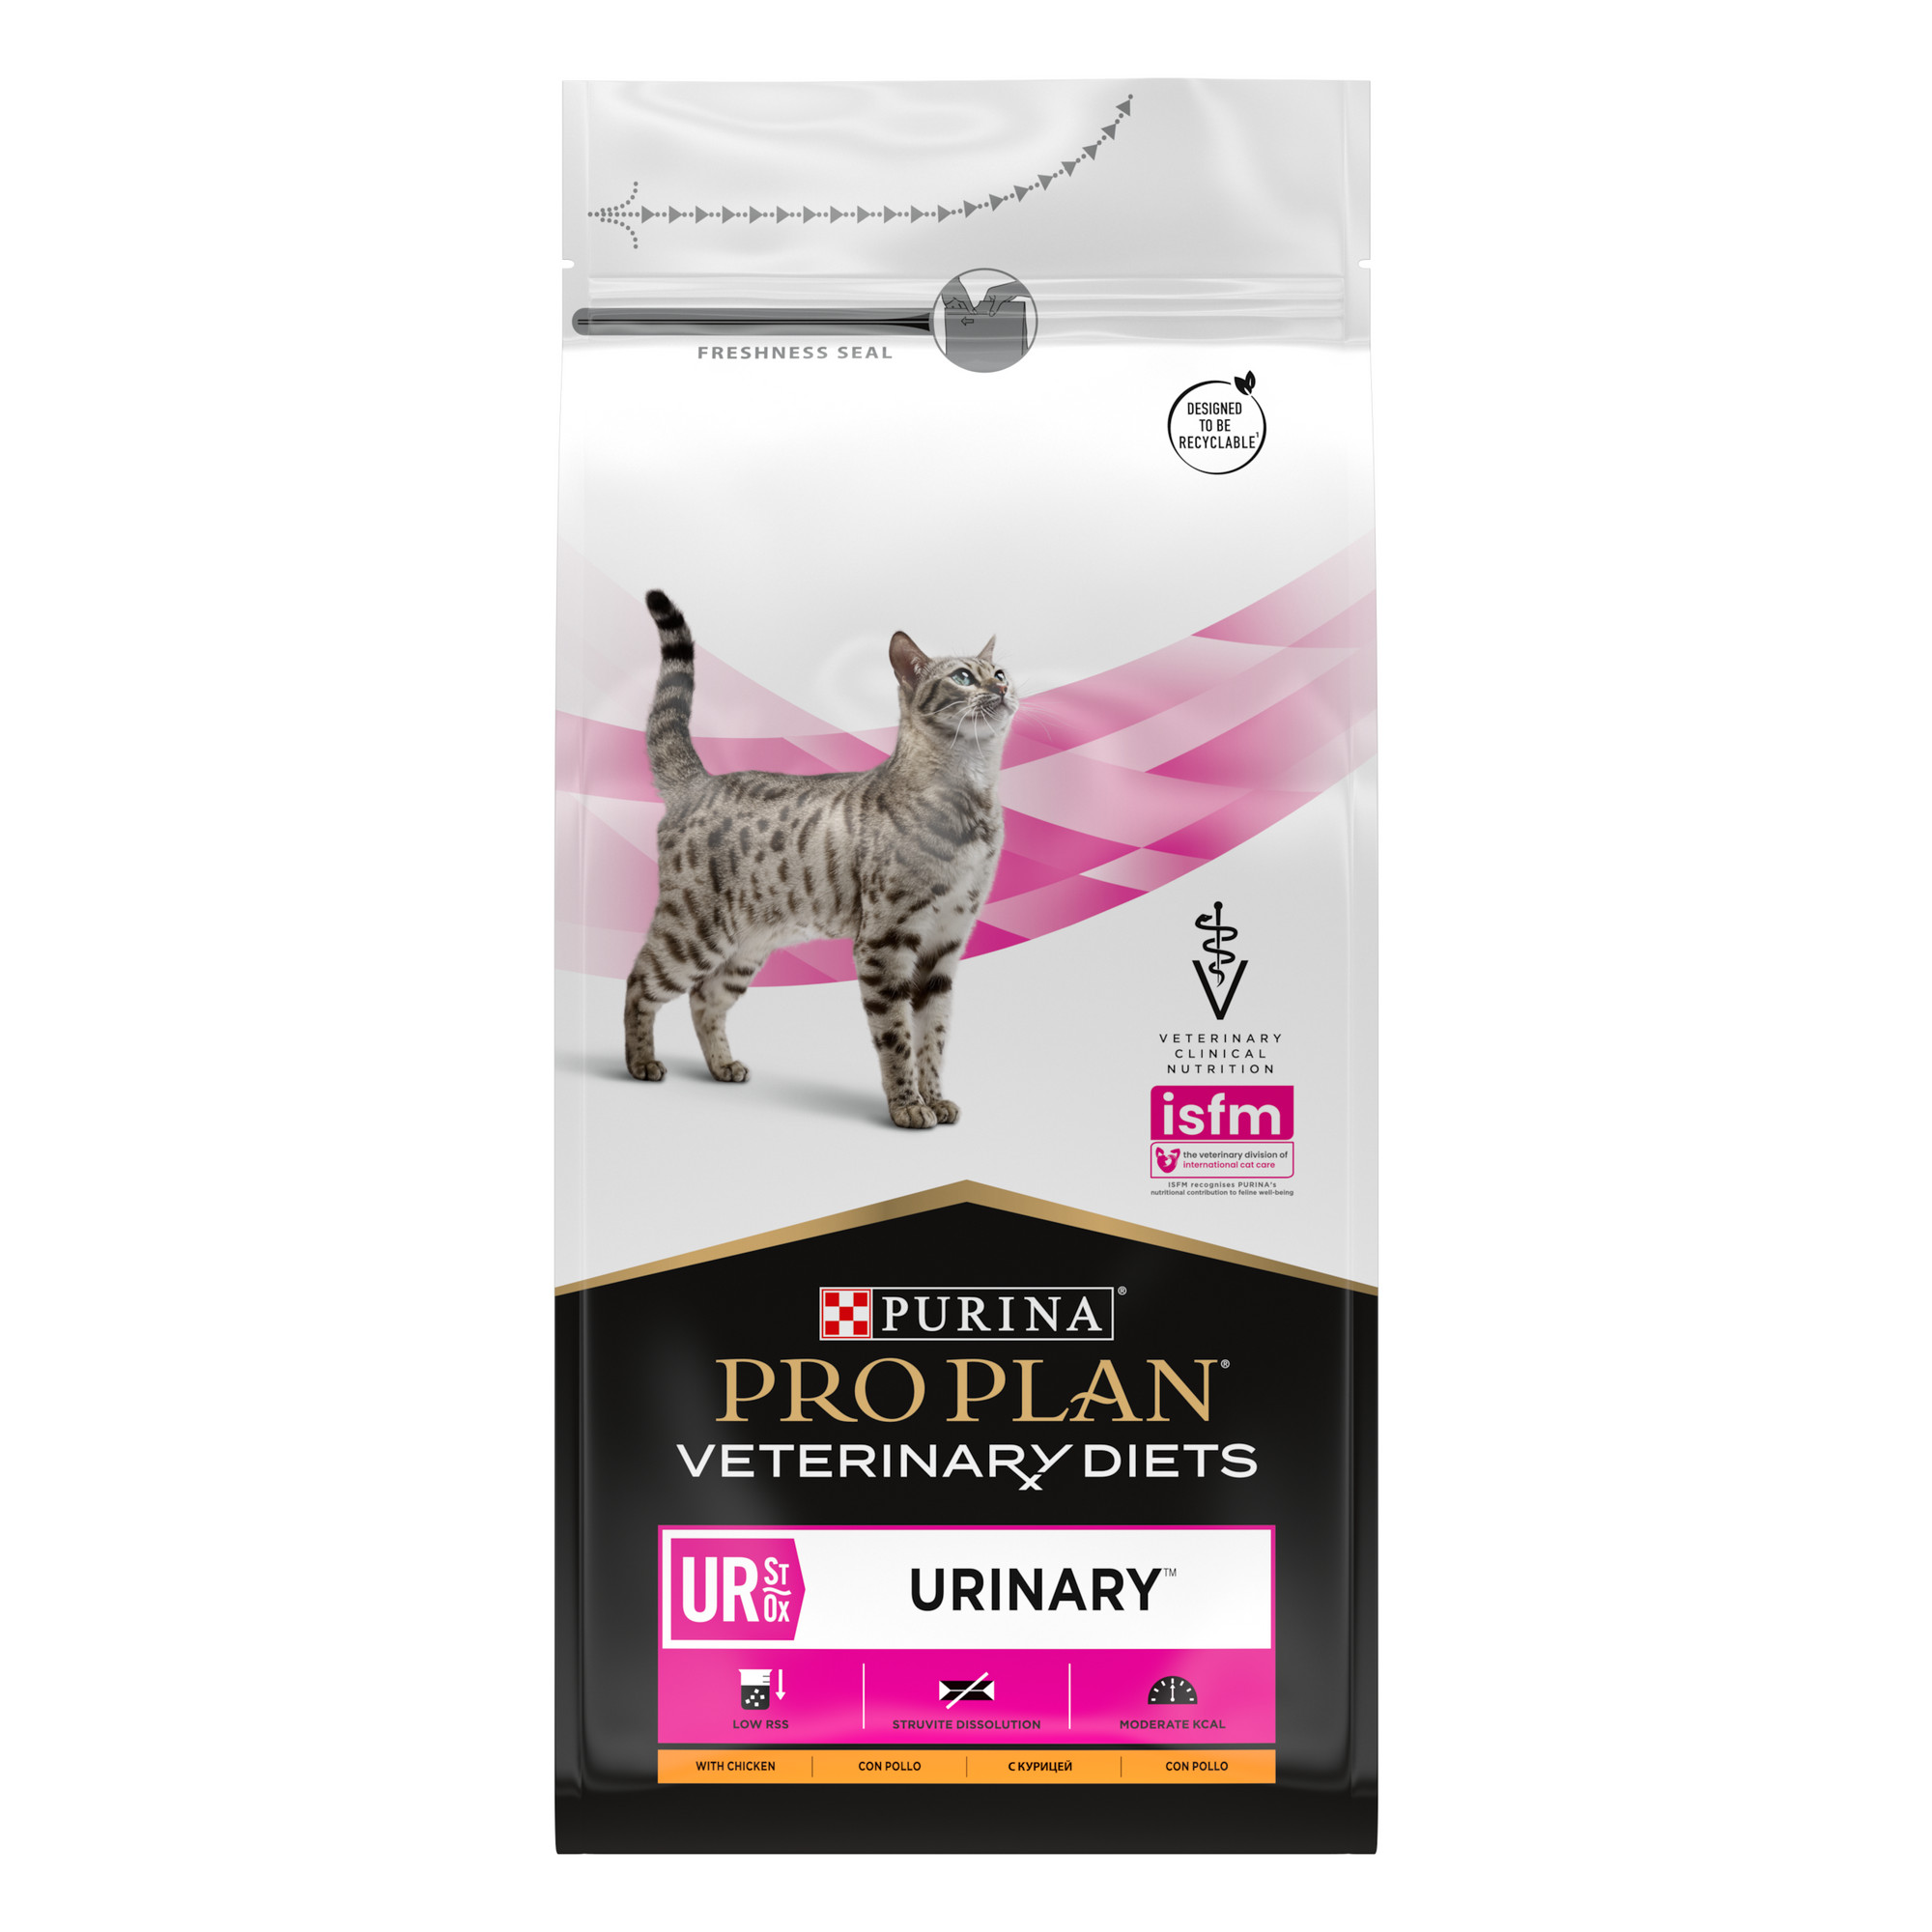 Сухой корм для кошек Pro Plan Veterinary Diets UR с курицей, 1,5кг